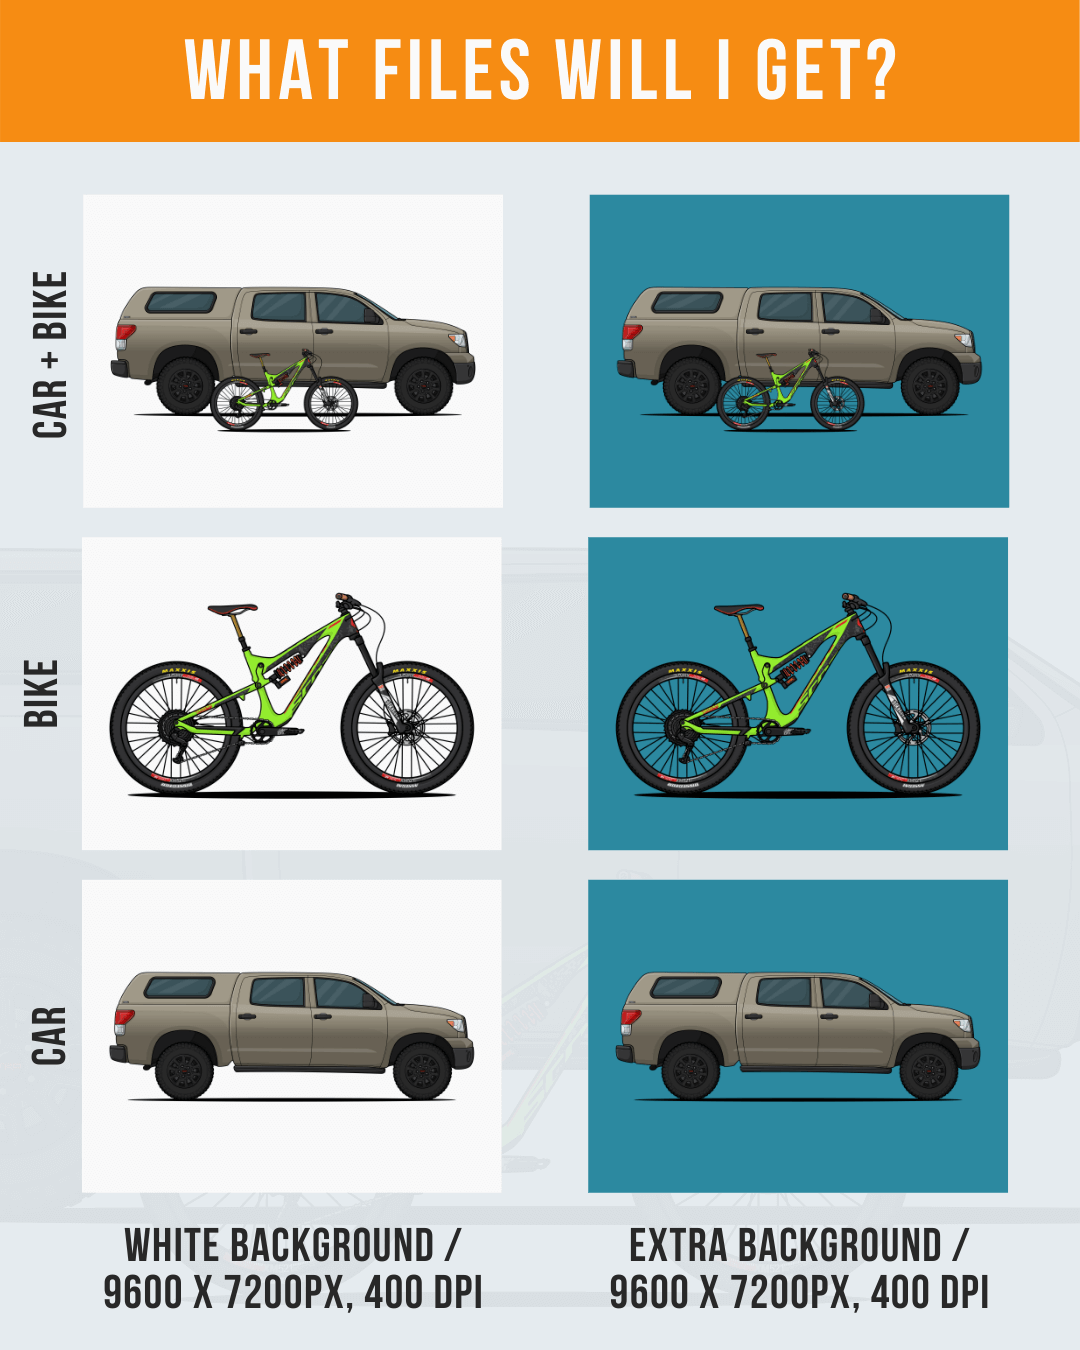 Draw My Car + Bike | Personalized Digital Artwork